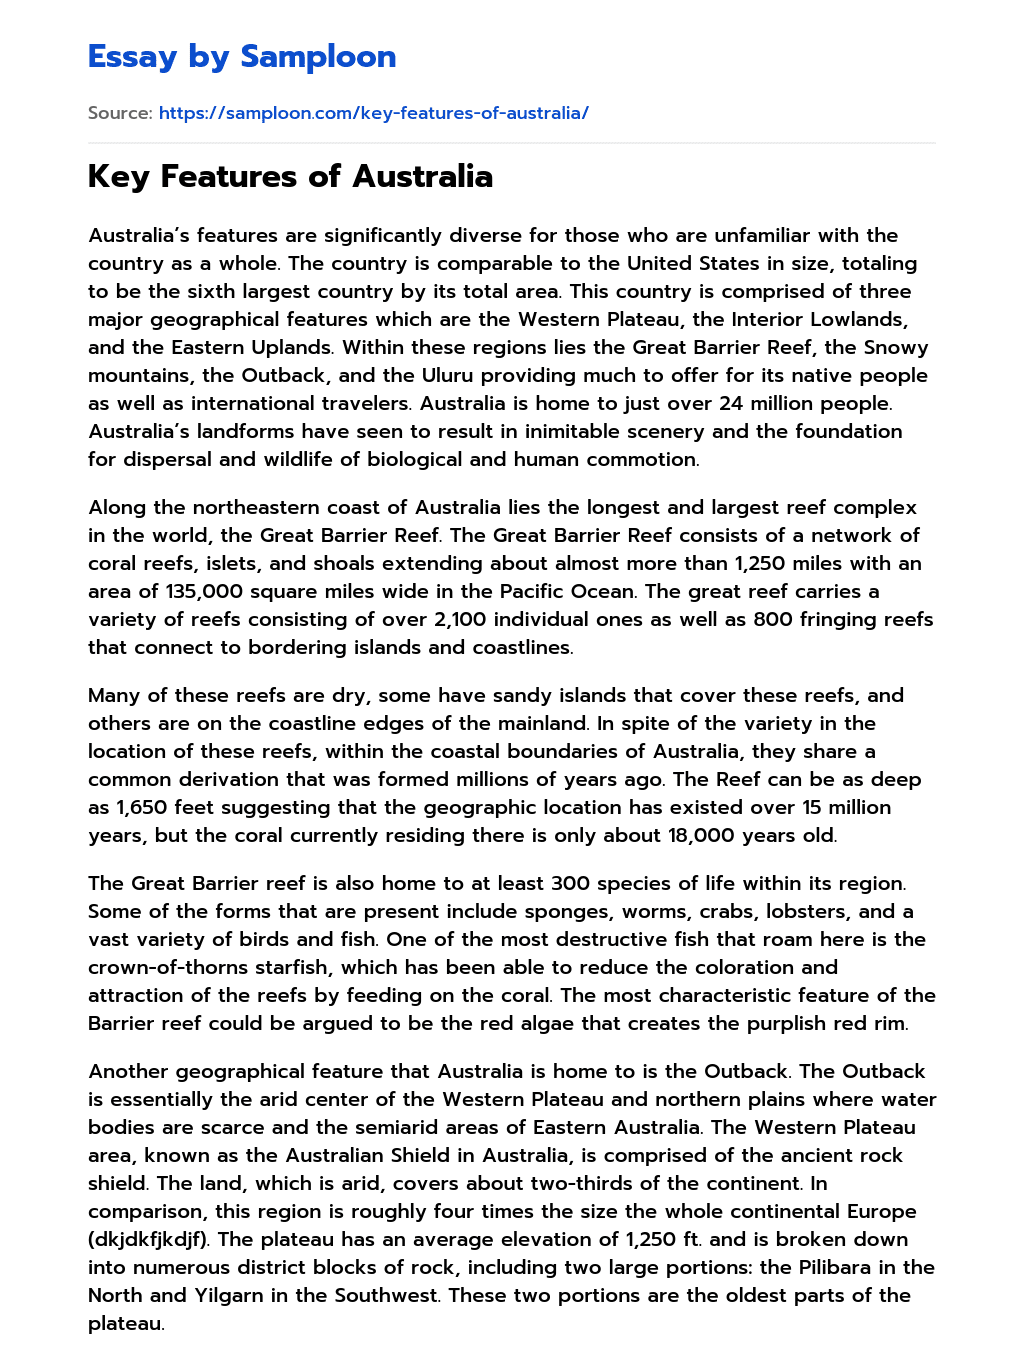 Key Features of Australia essay